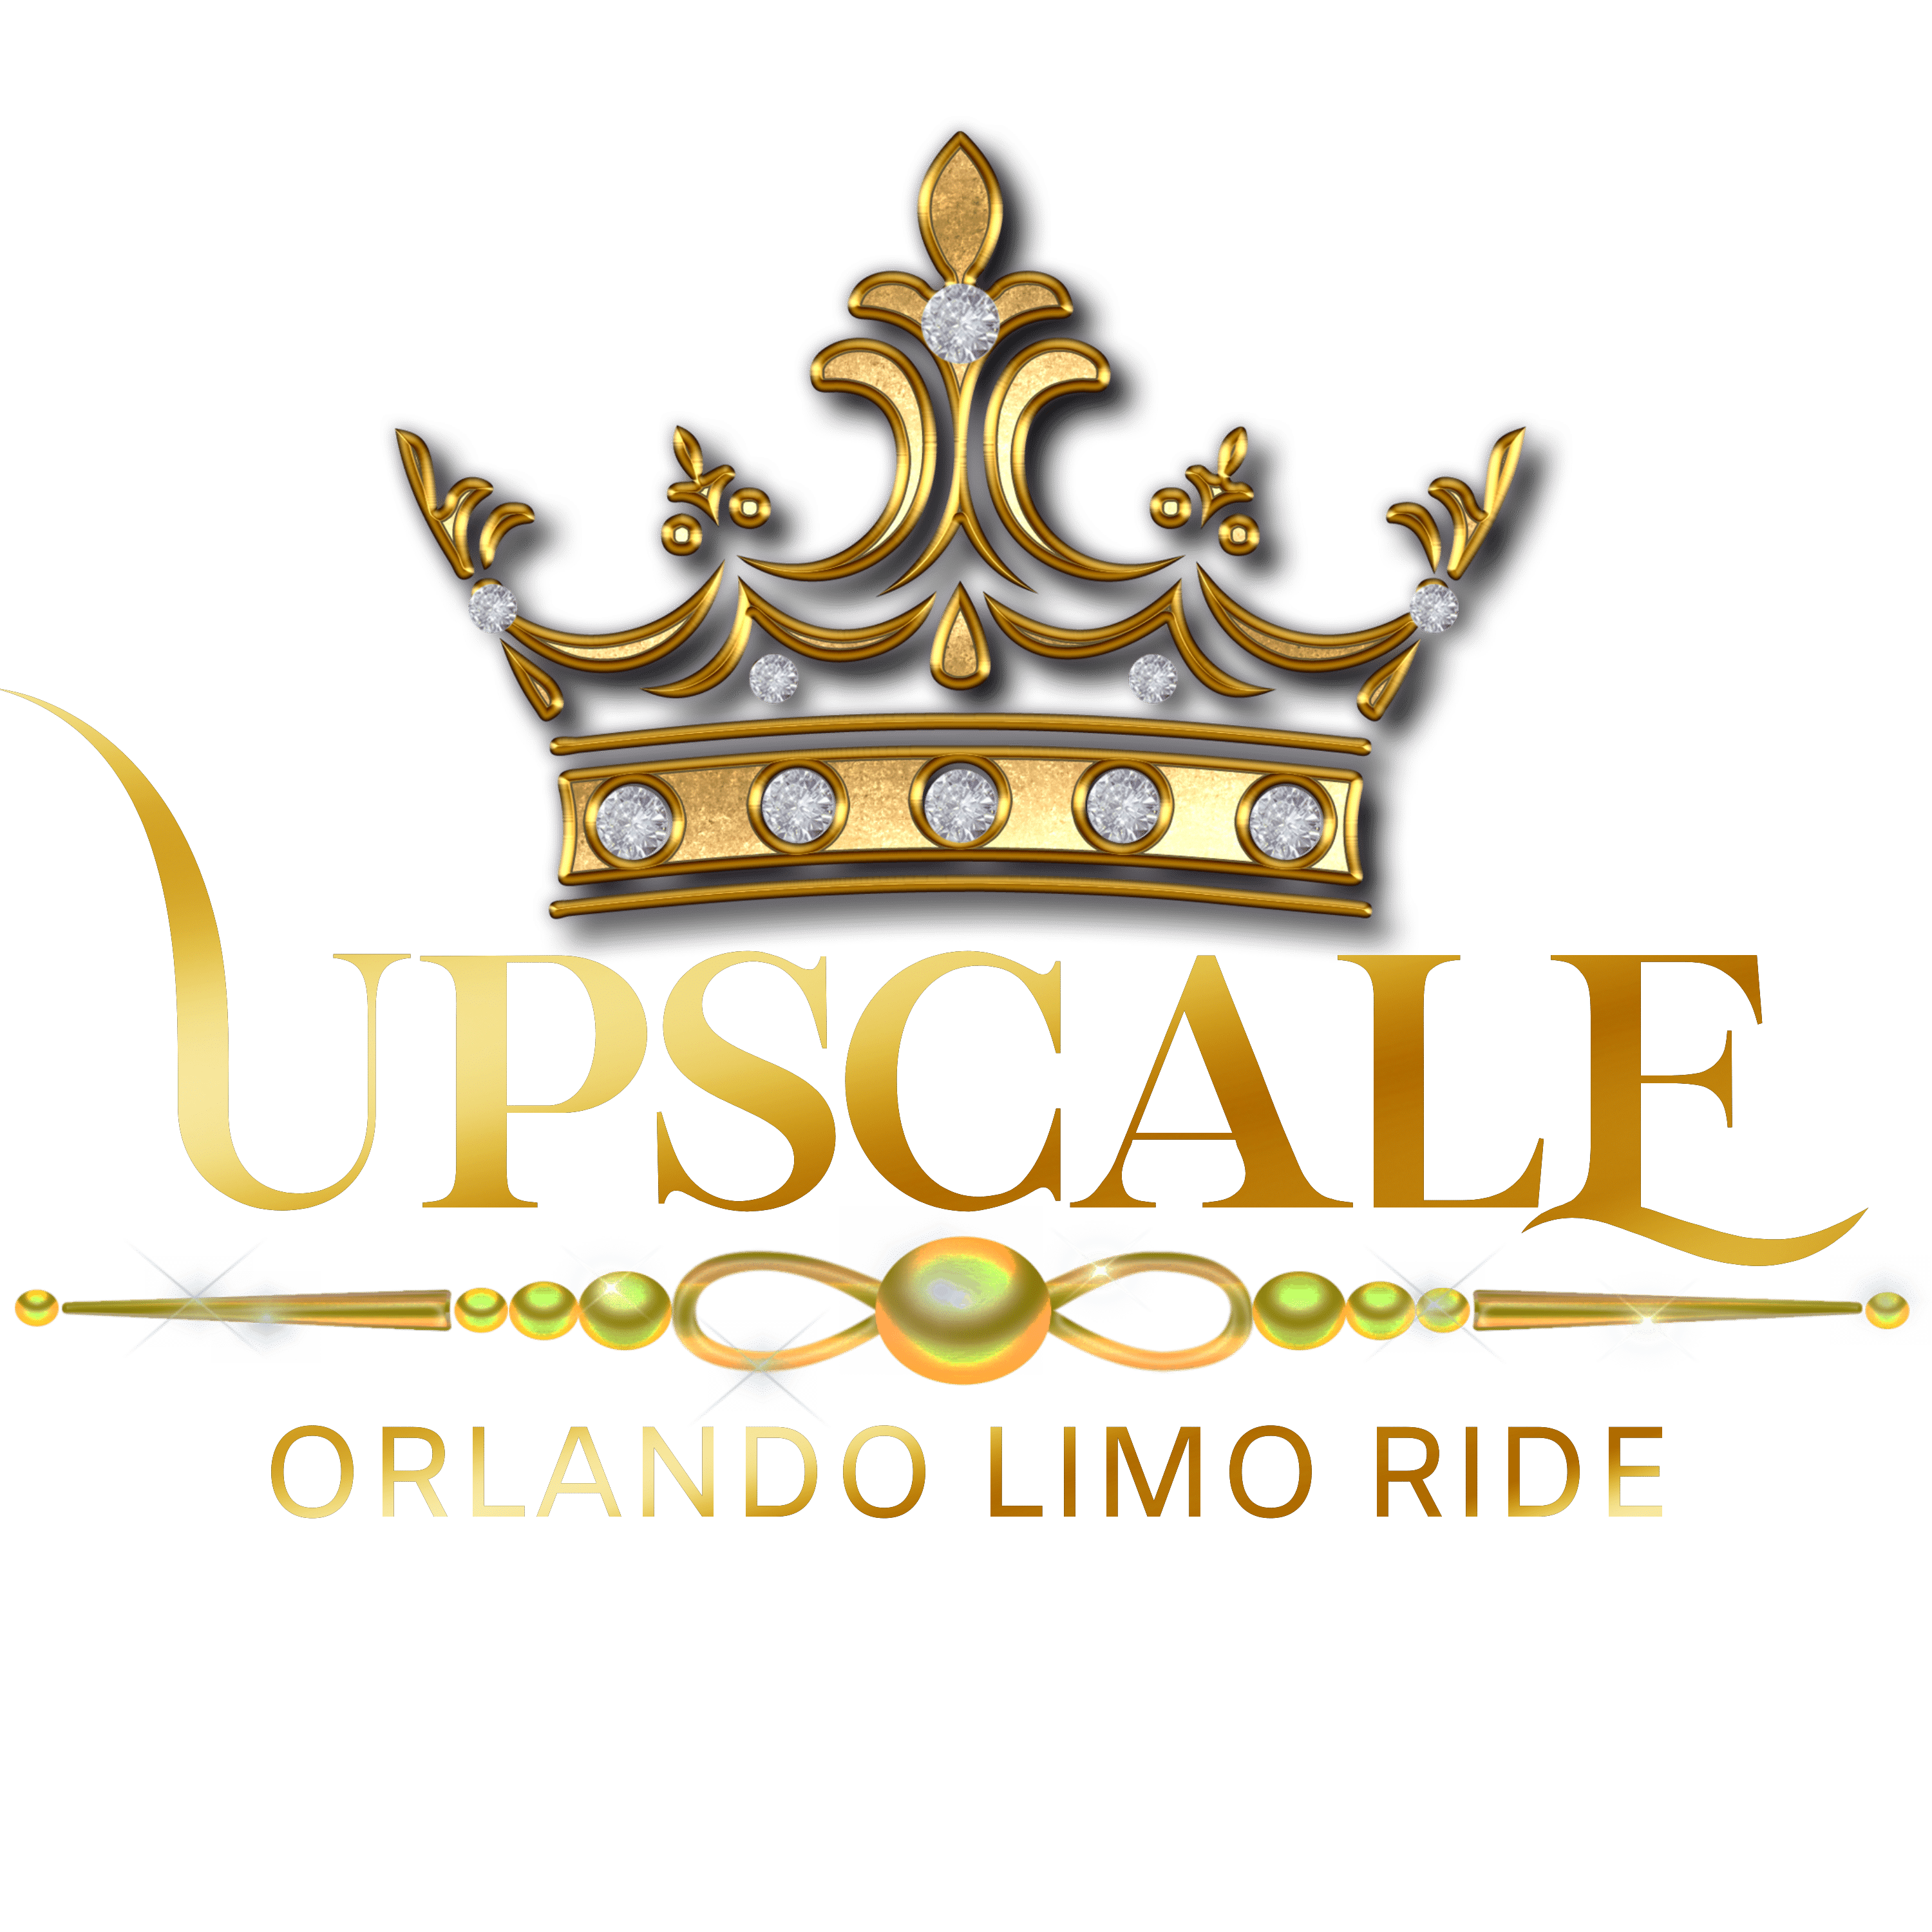 Orlando Limo Ride, a Unit of Upscale Transportation